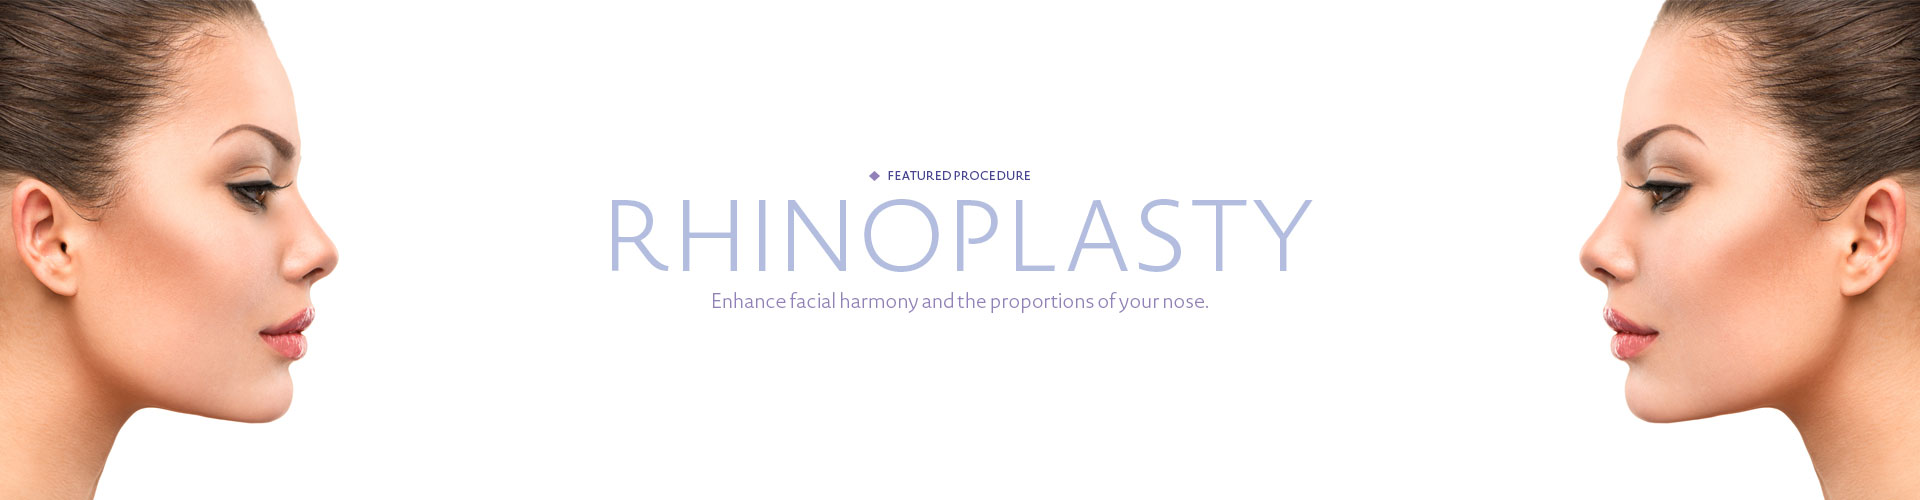 Rhinoplasty - Featured procedure